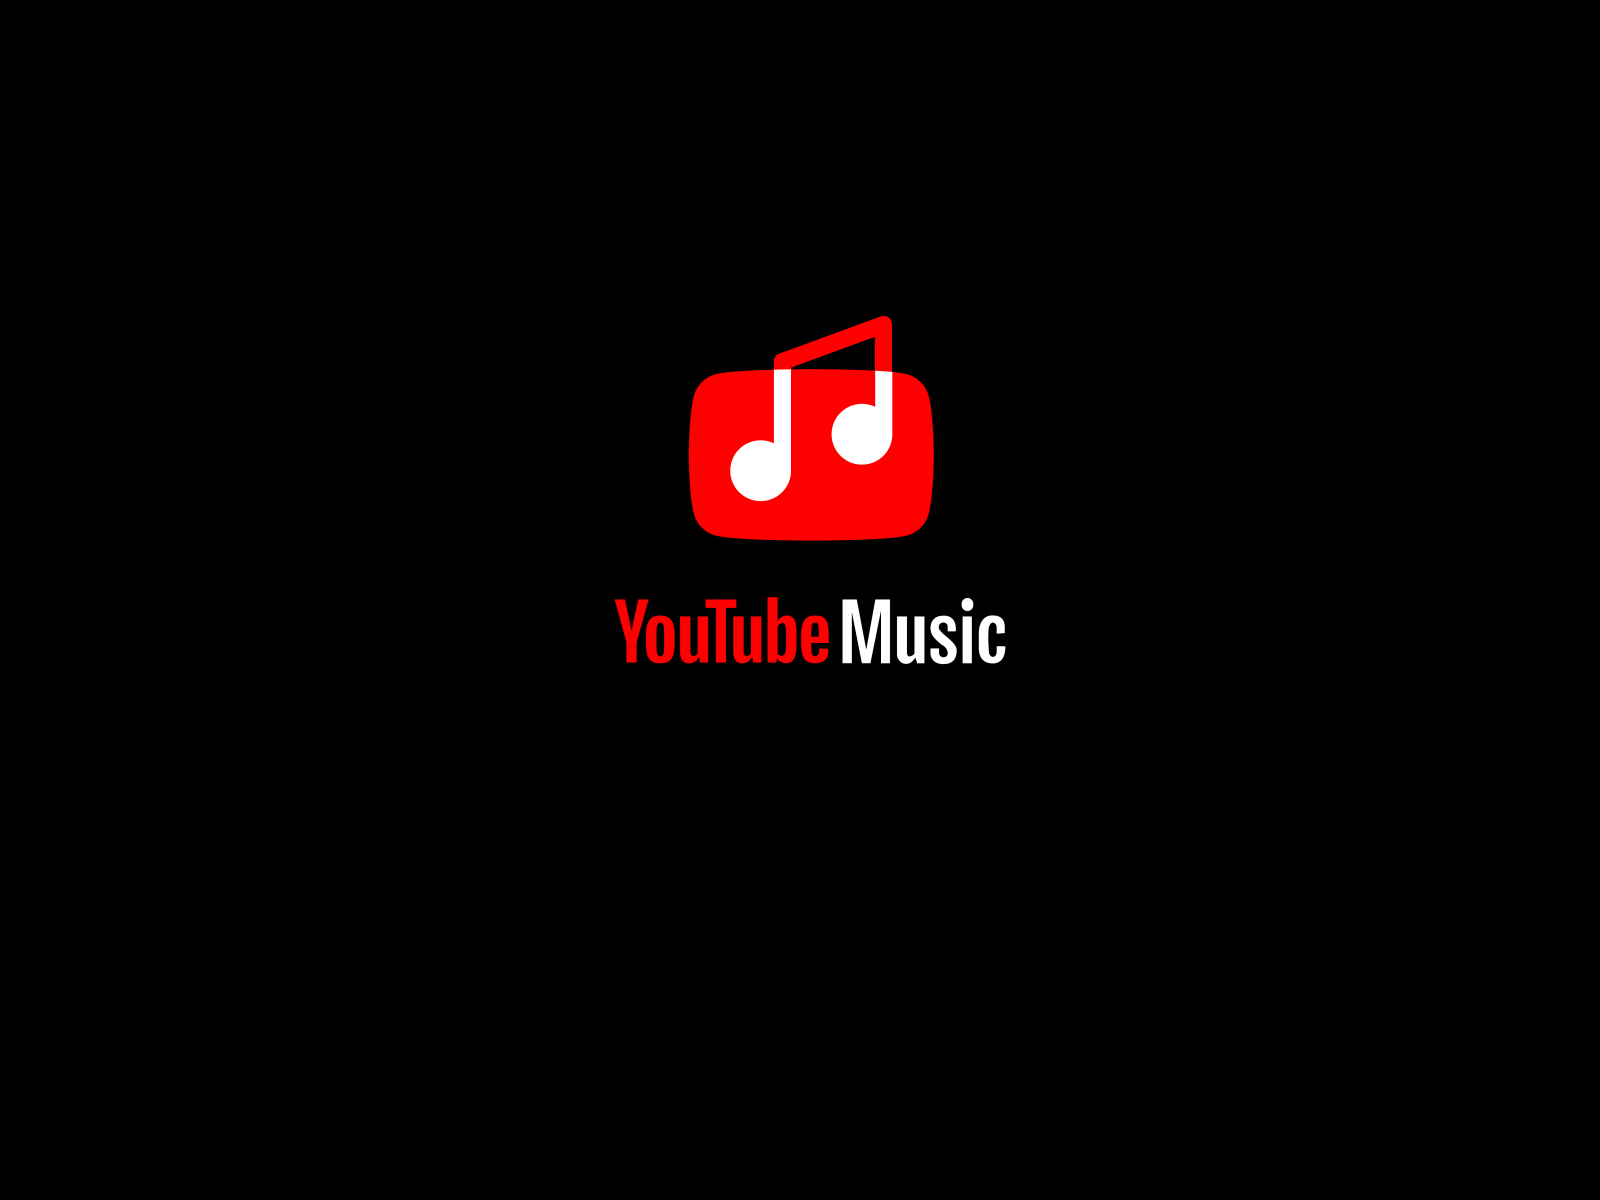 Youtube Music By Furkan Arinci On Dribbble